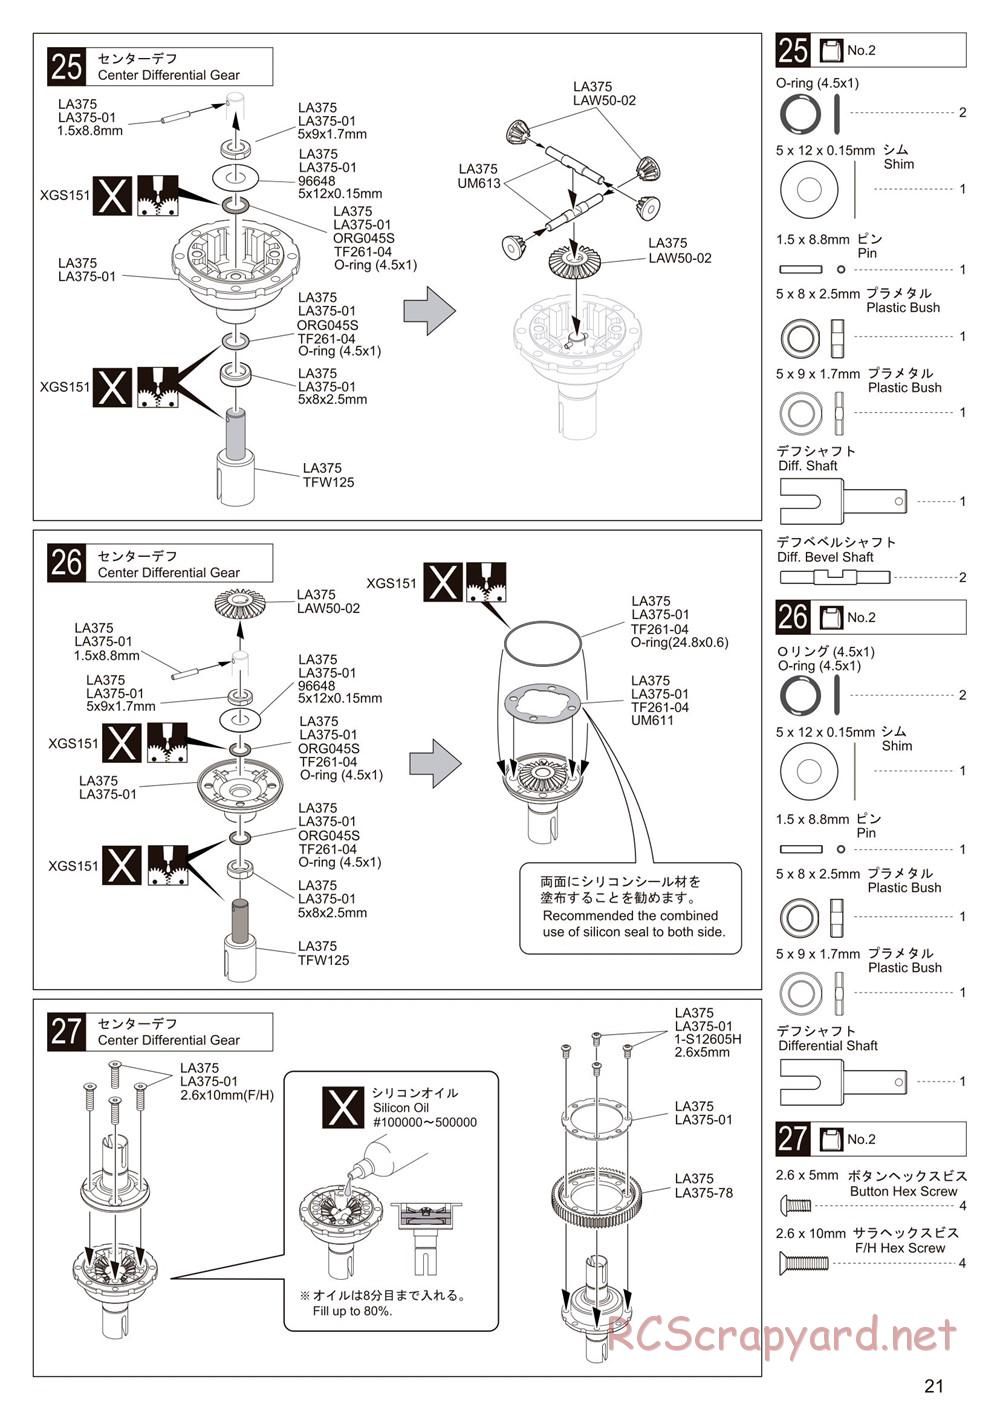 Kyosho - Lazer ZX6.6 - Manual - Page 21